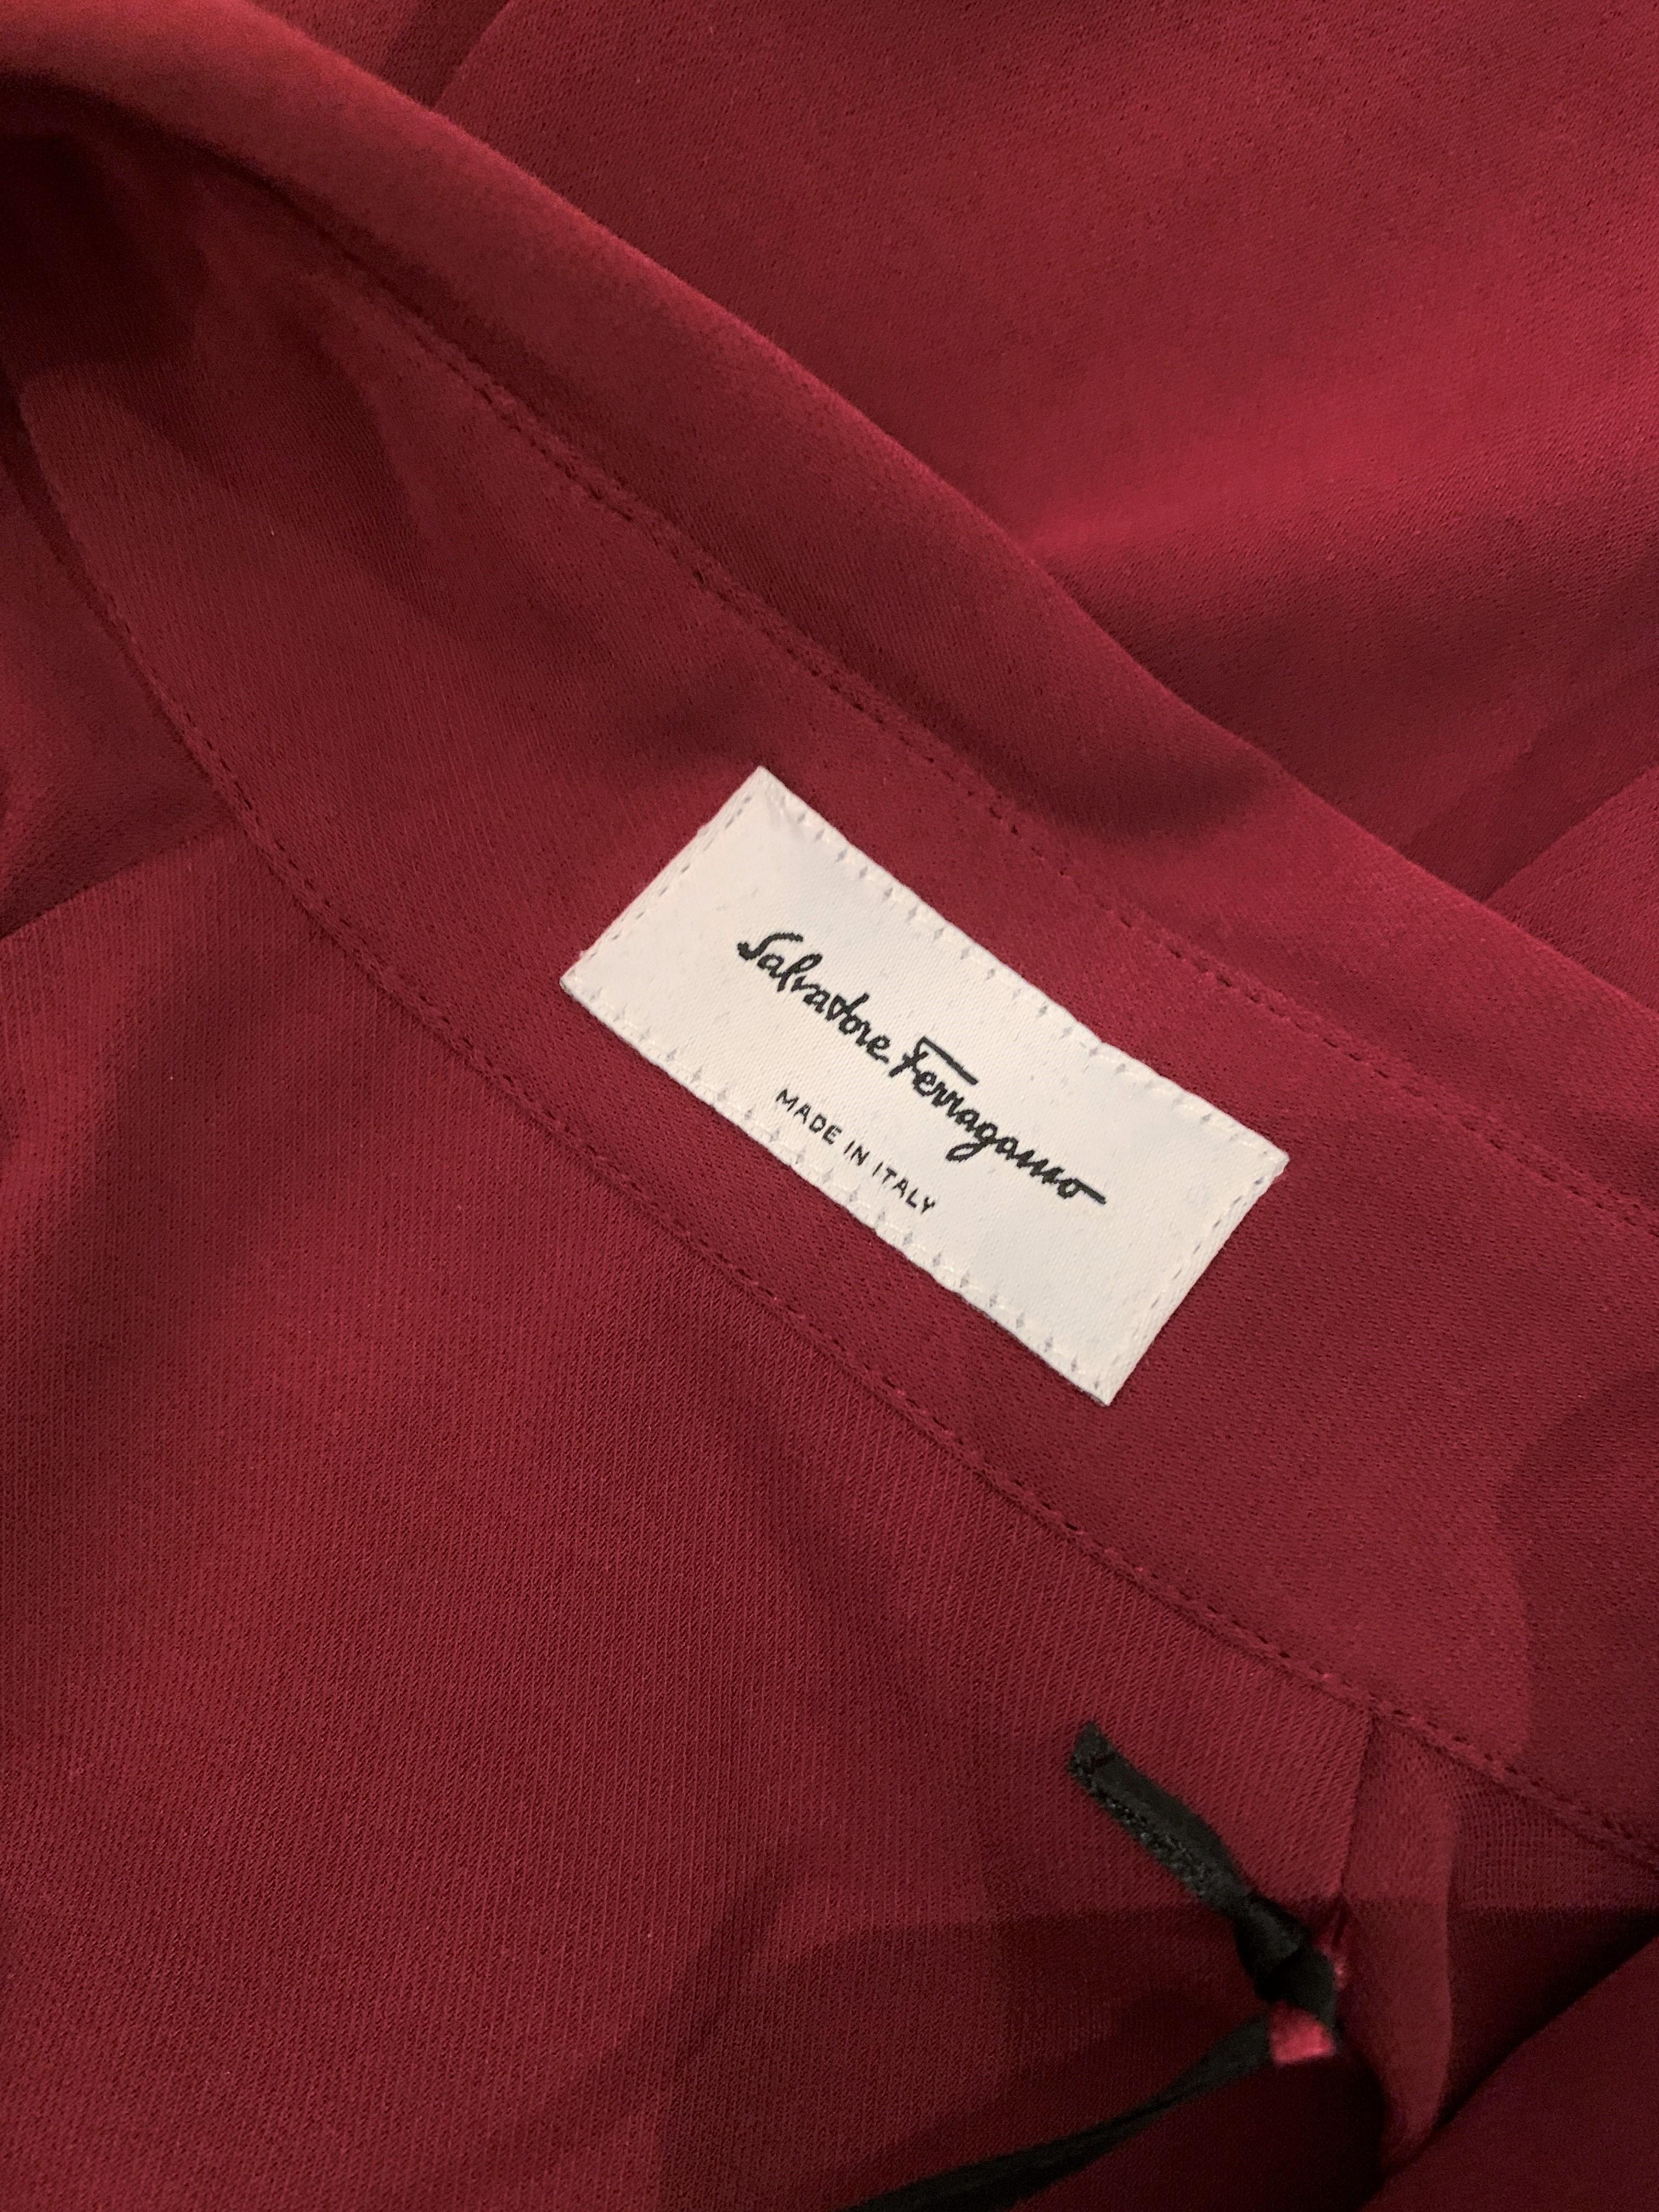 New Rare Salvatore Ferragamo Red Silk Dress F/W 2018  With Tags $3200 Sz 38 2